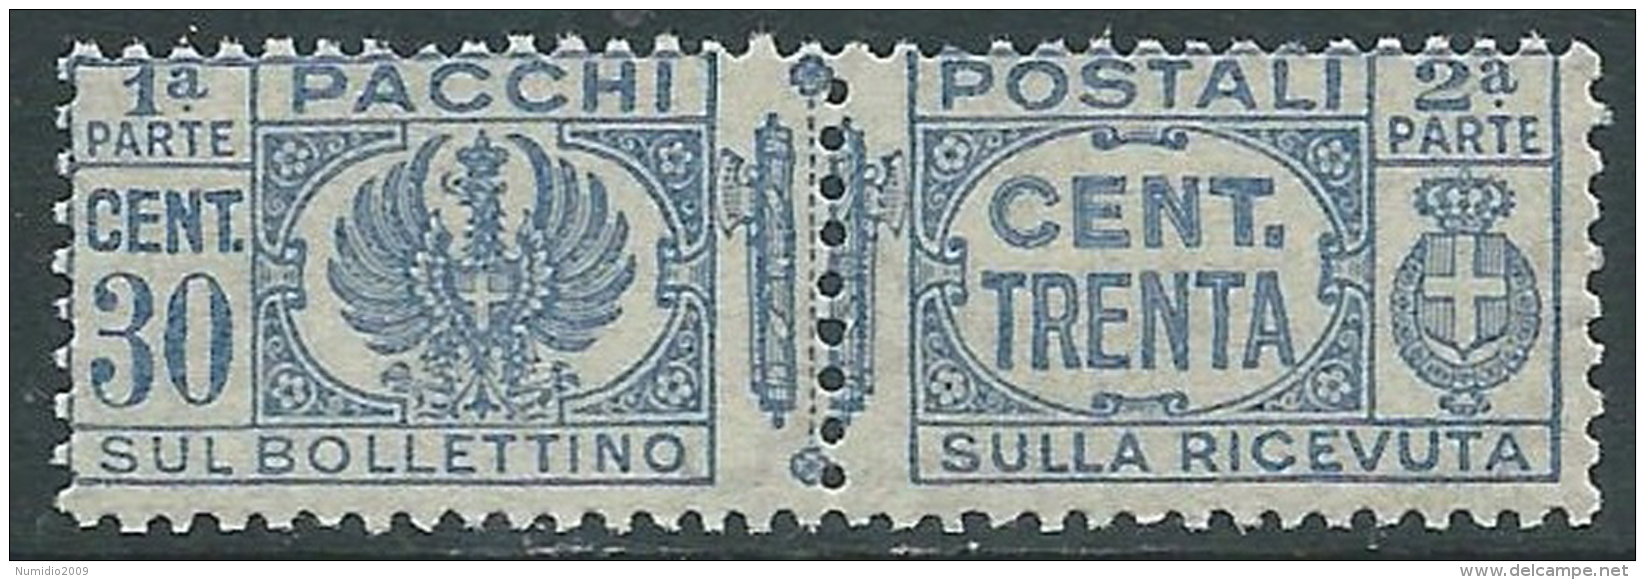 1927-32 REGNO PACCHI POSTALI 30 CENT MNH ** - P47-8 - Pacchi Postali